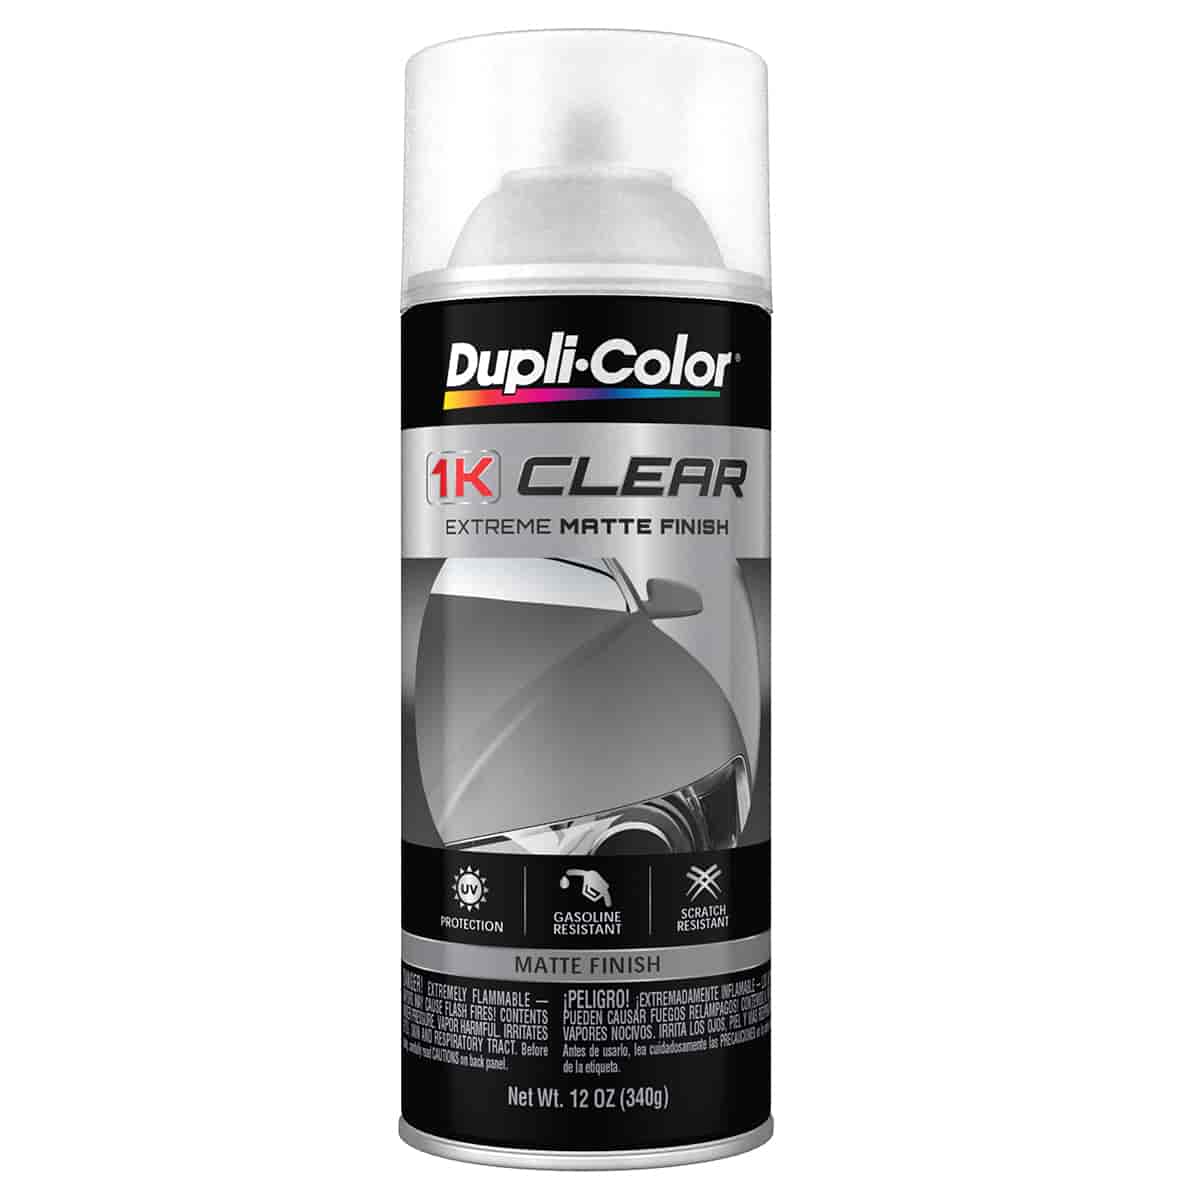 Duplicolor 1K Clear Extreme Matte Finish Spray Paint (12 oz)